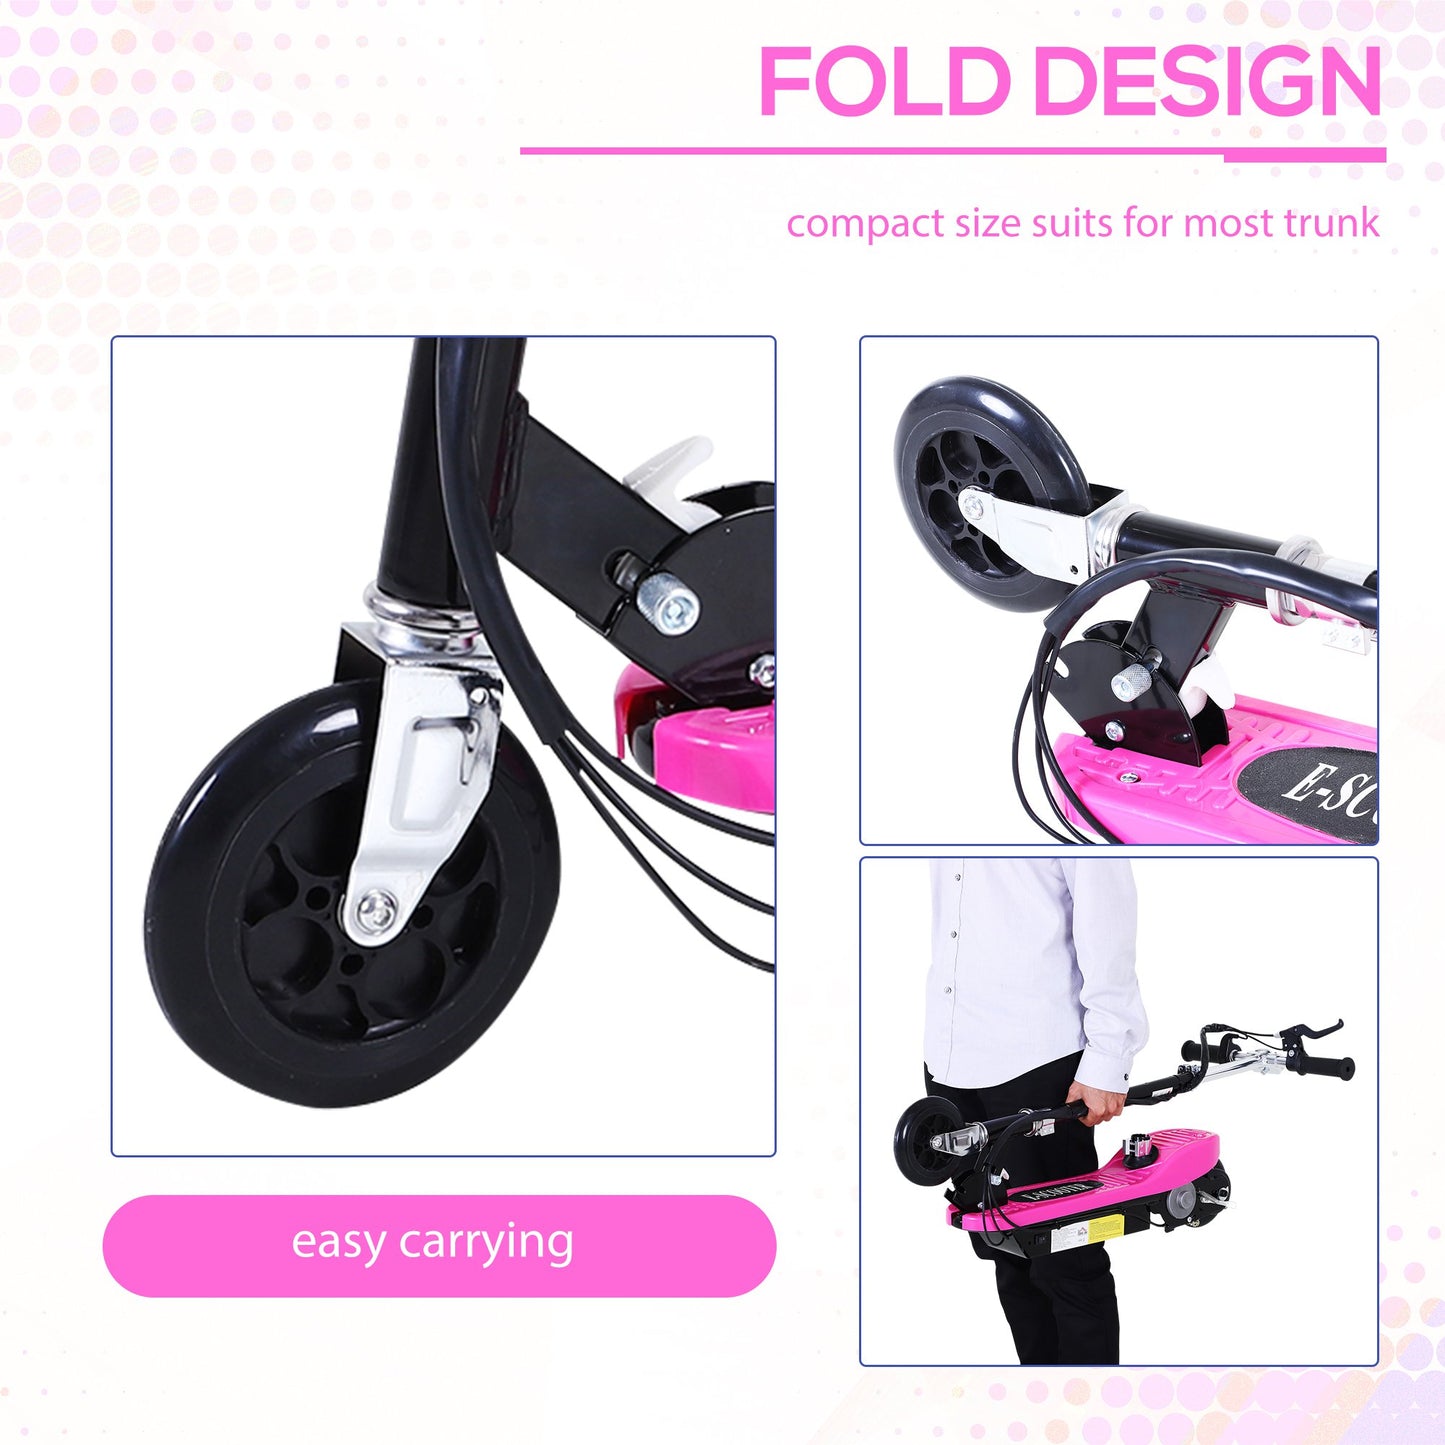 HOMCOM Foldable Electric Scooter for Kids 12V 120W W/Brake Kickstand-Pink